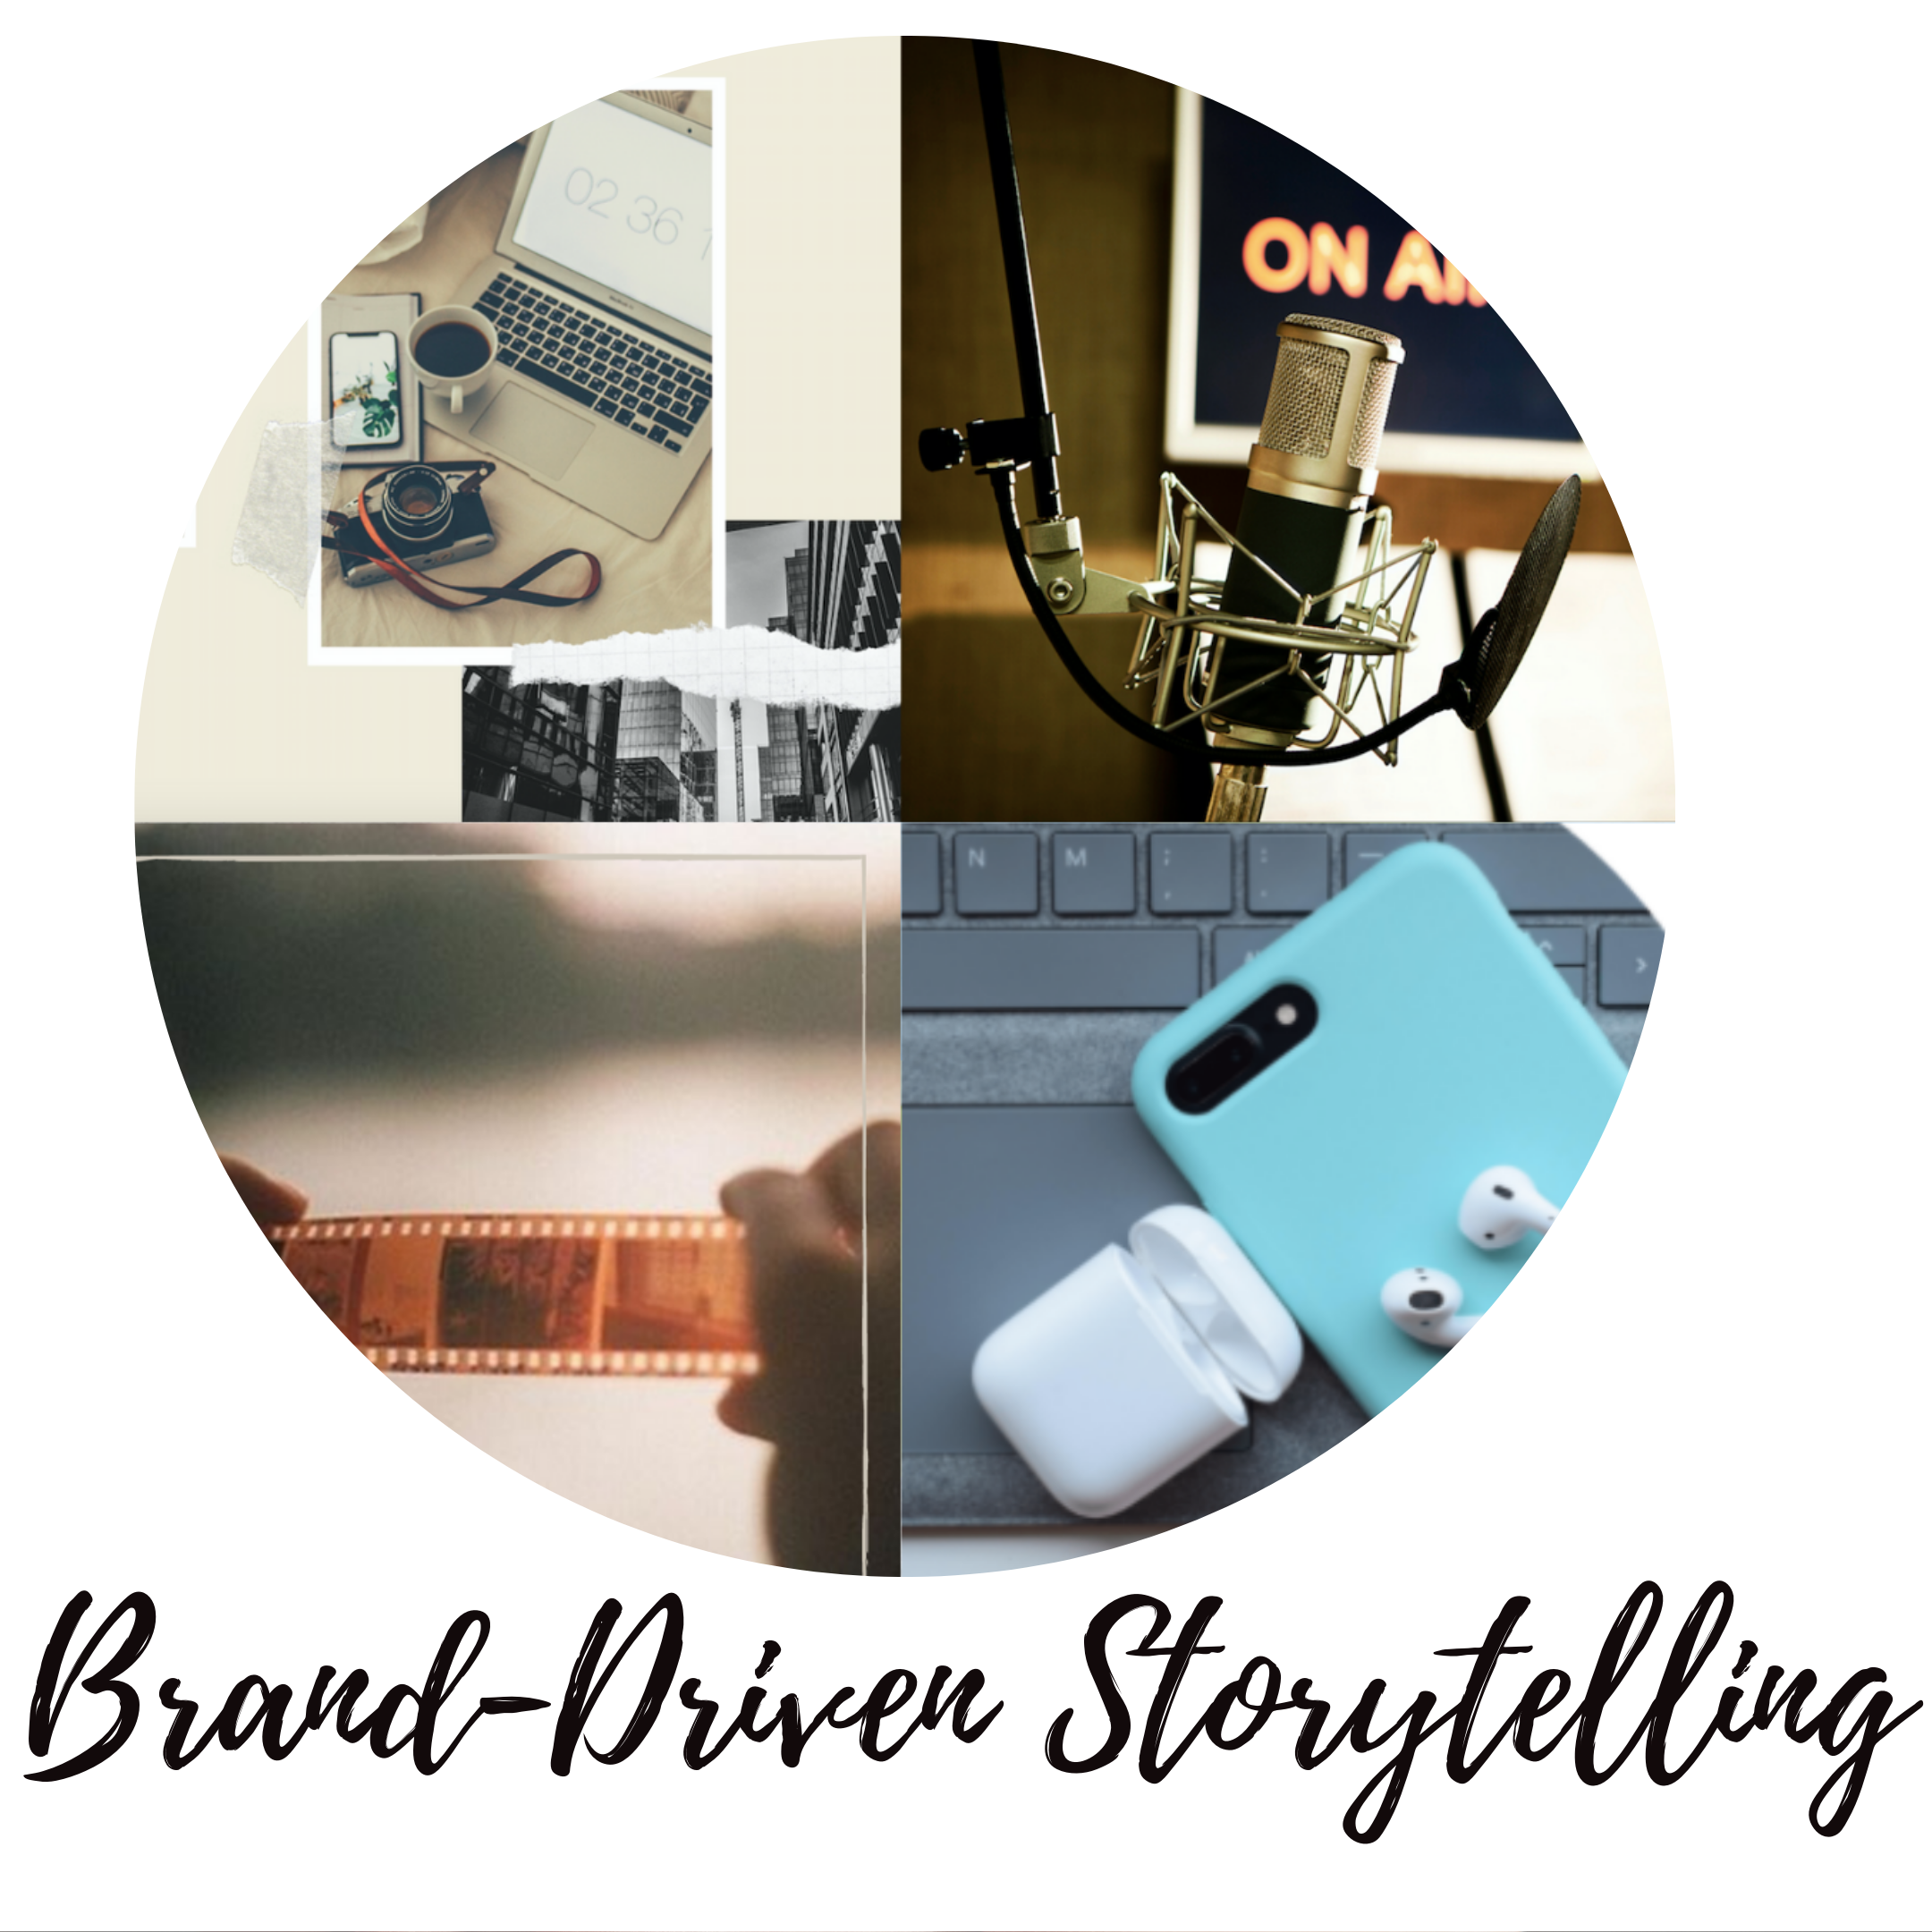 Branded Storytelling